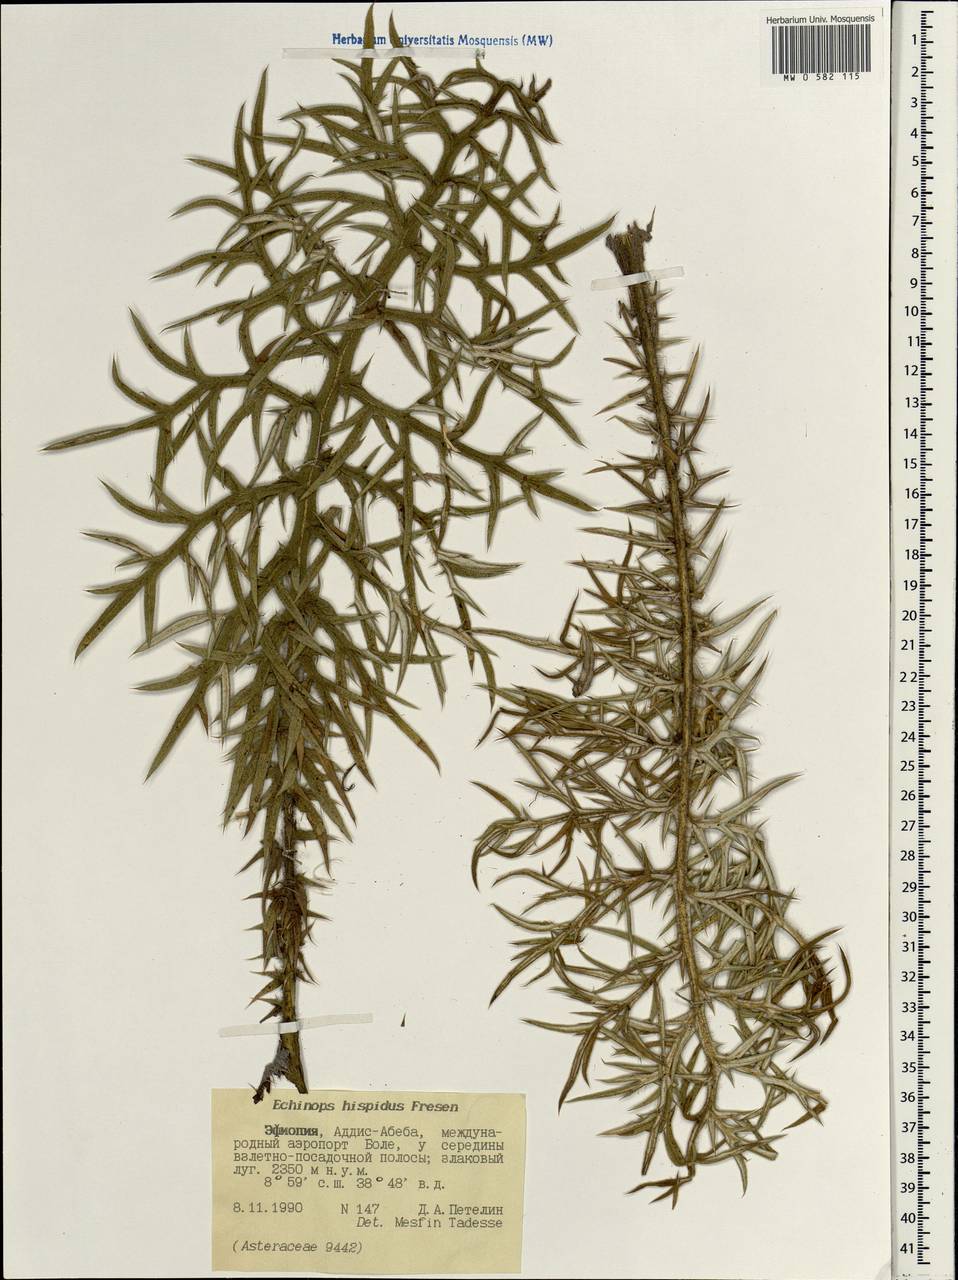 Echinops hispidus Fresen., Африка (AFR) (Эфиопия)